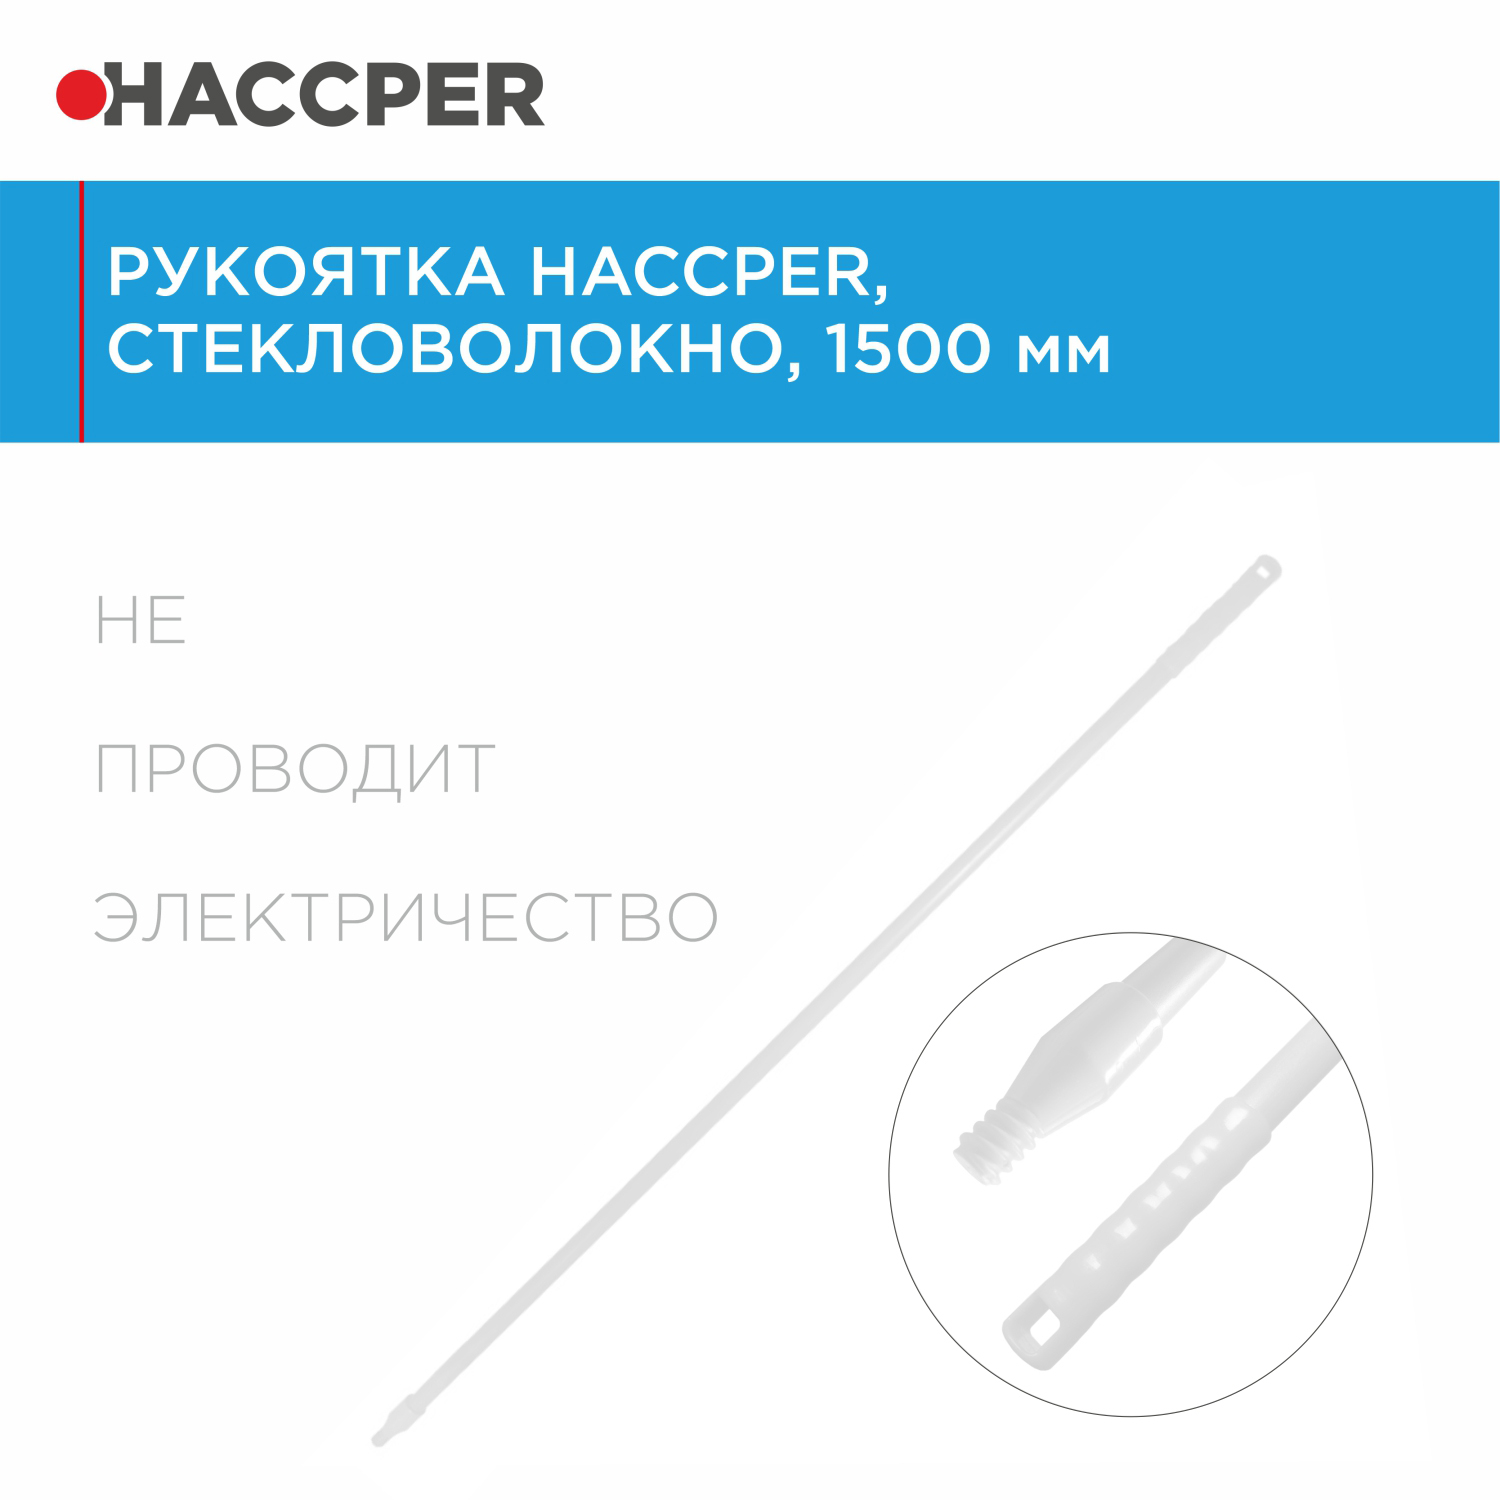 Рукоятка HACCPER стекловолокно, 1500 мм, белая